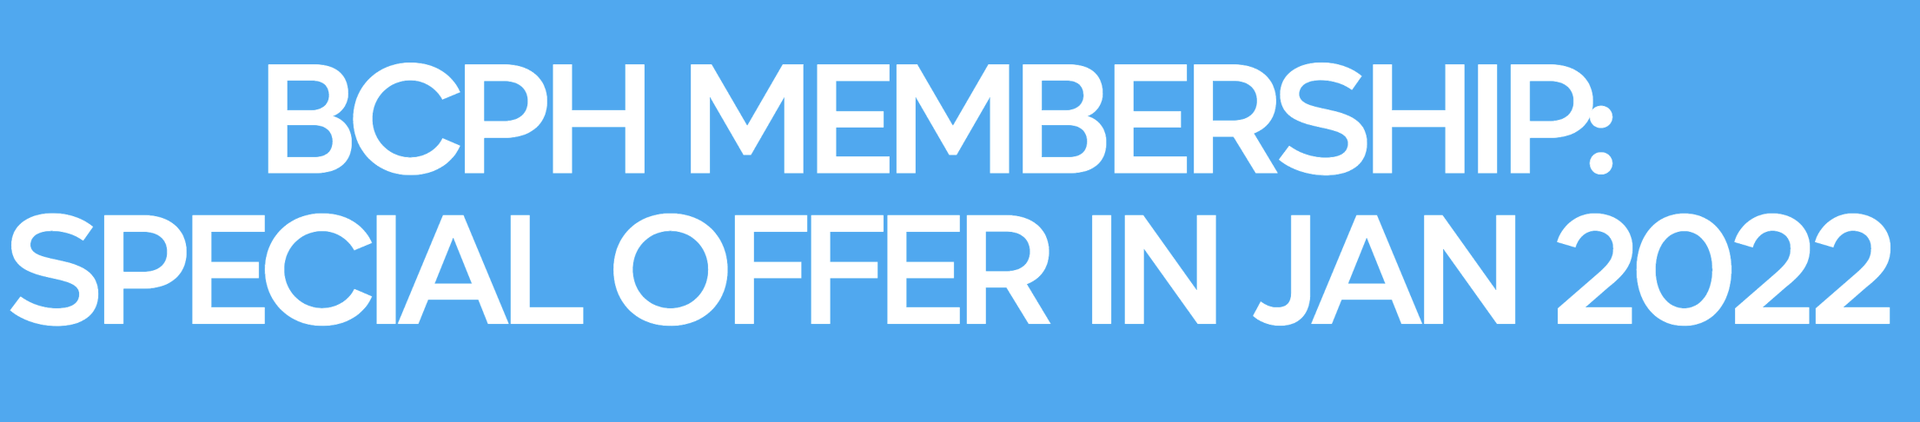 BCPH Membership: Special Offer in Jan 2022